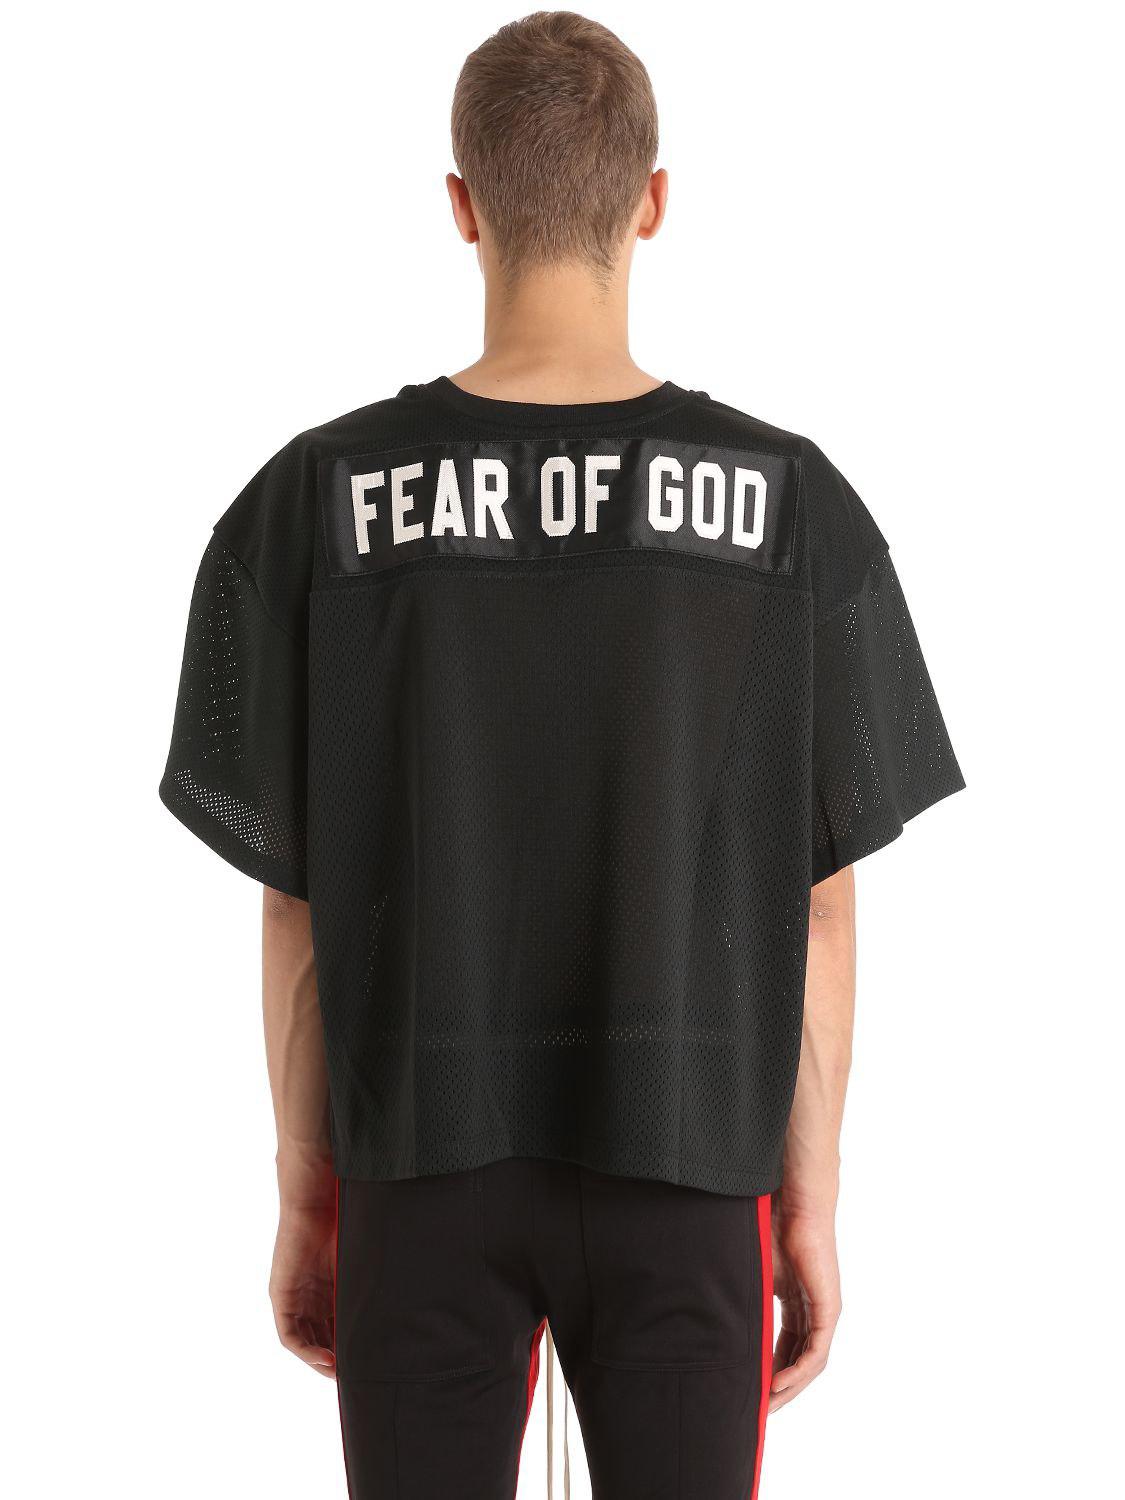 Fear Of God Printed Mesh T-shirt in Black for Men - Lyst